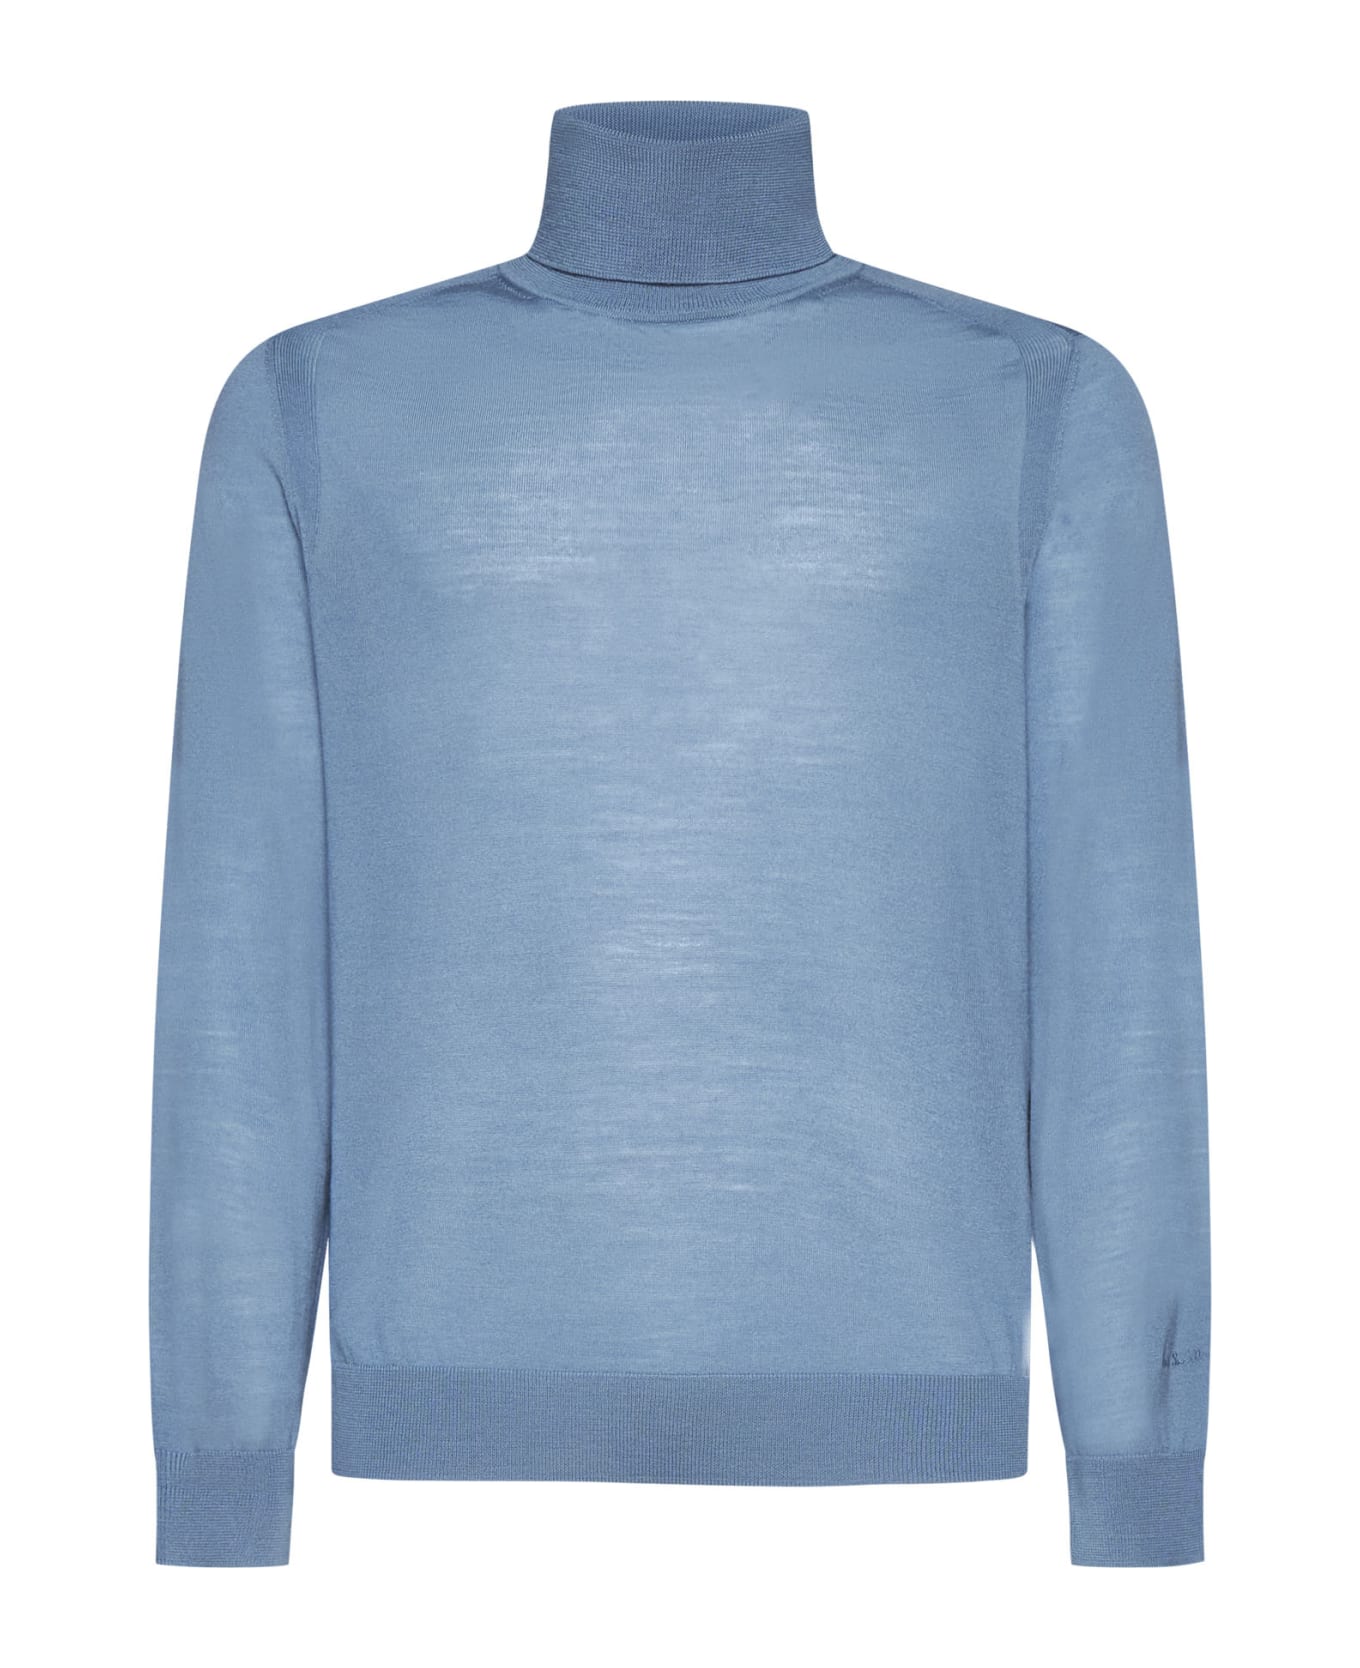 Paul Smith Sweater - Turquoise ニットウェア